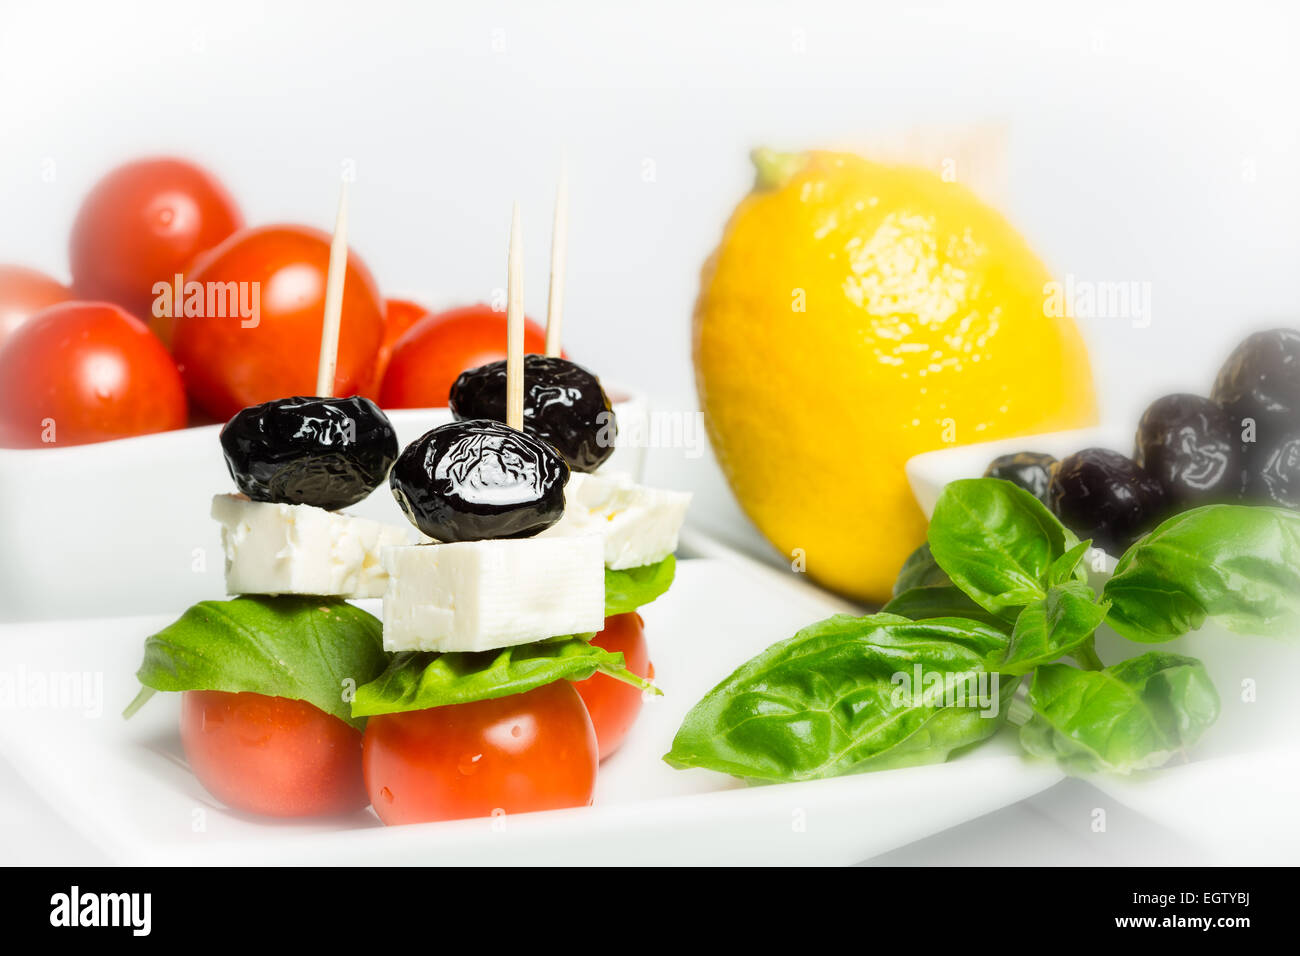 Italian style - tomato, cheese, olives and basil Stock Photo